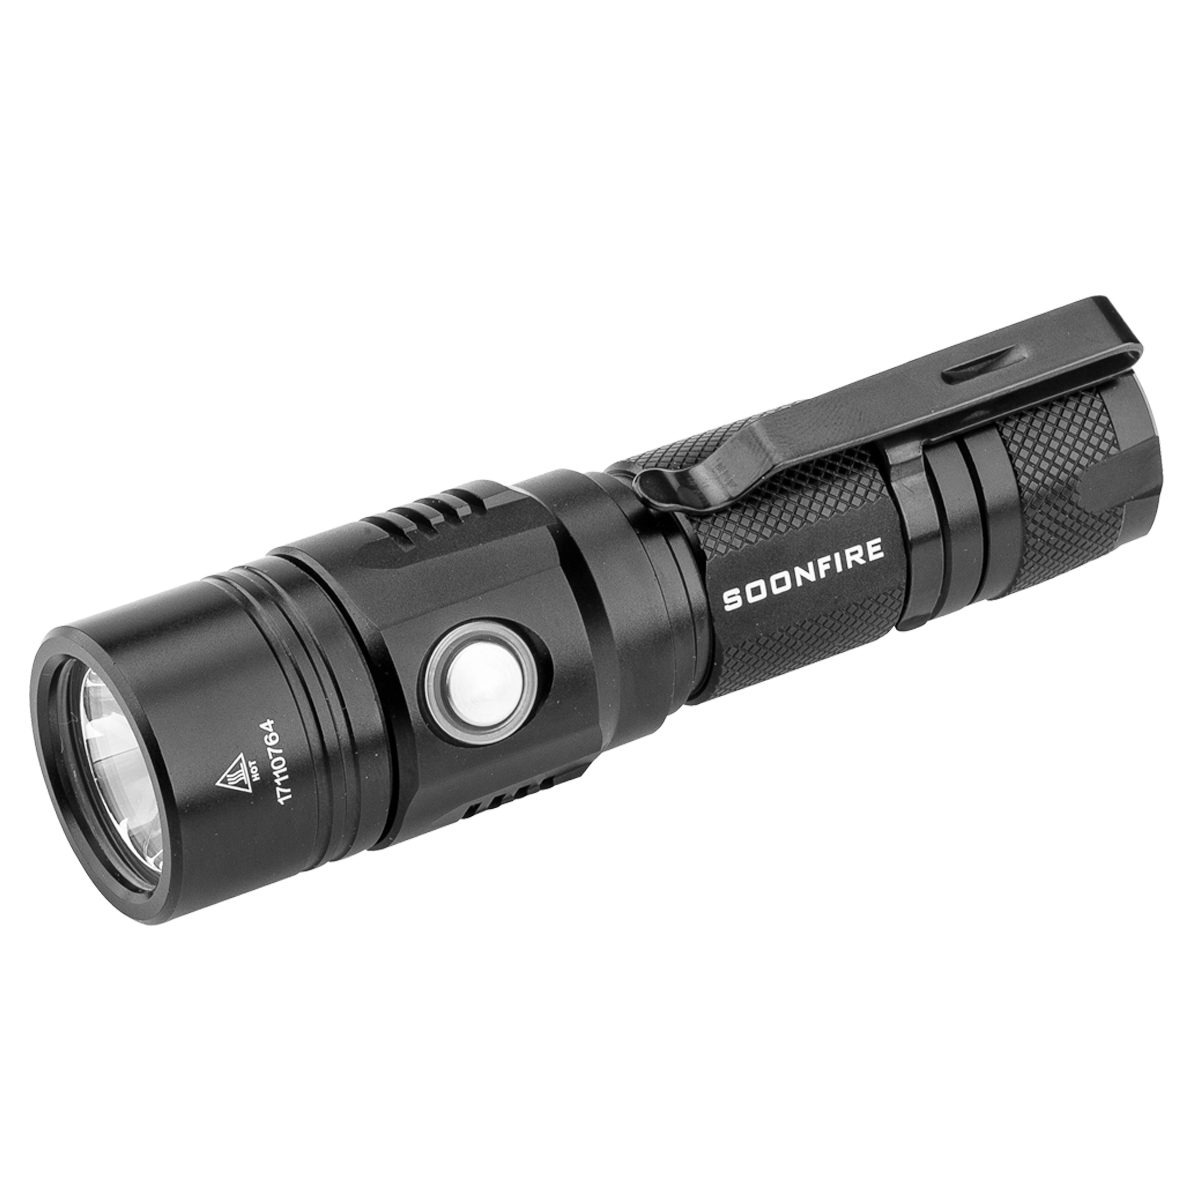 Soonfire E07 Cree XP-L LED Rechargeable Flashlight